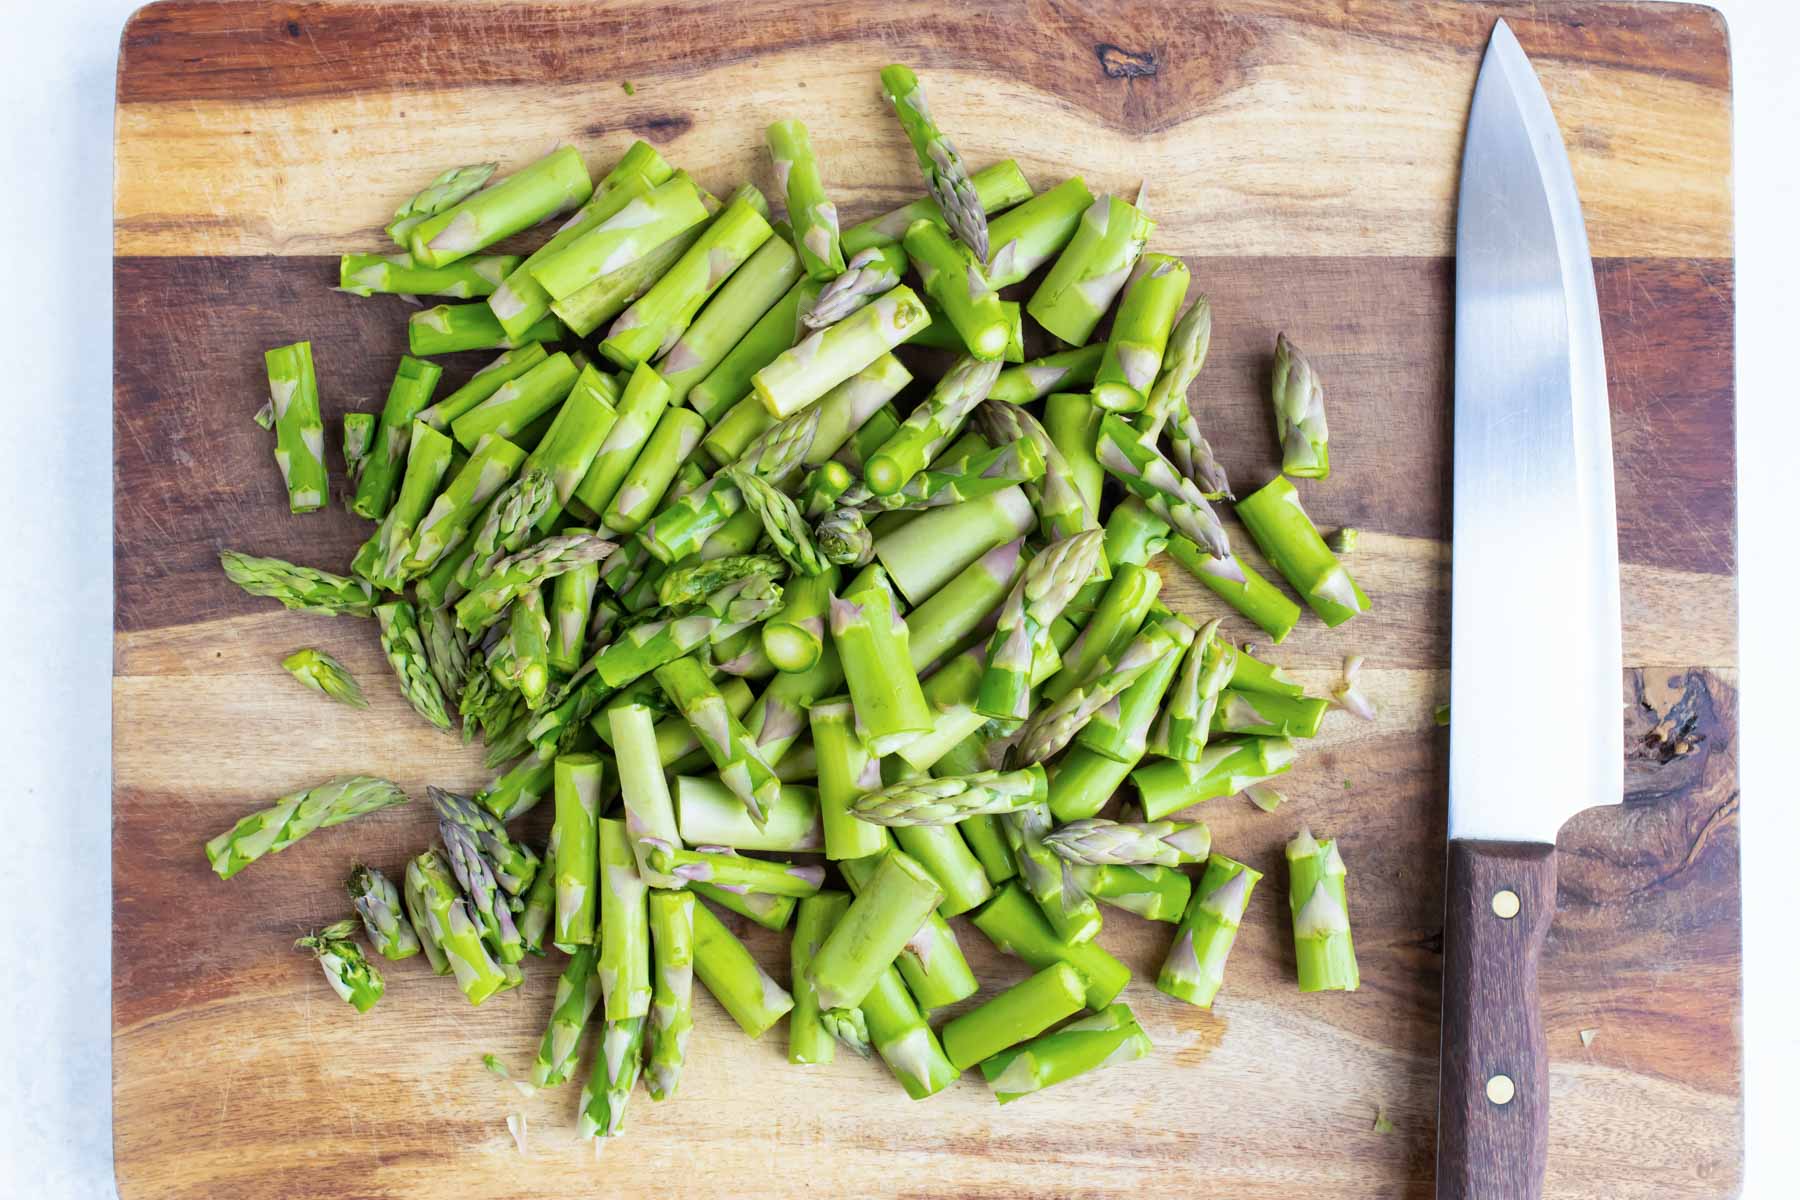 Chopped asparagus on a wooden cutting board.